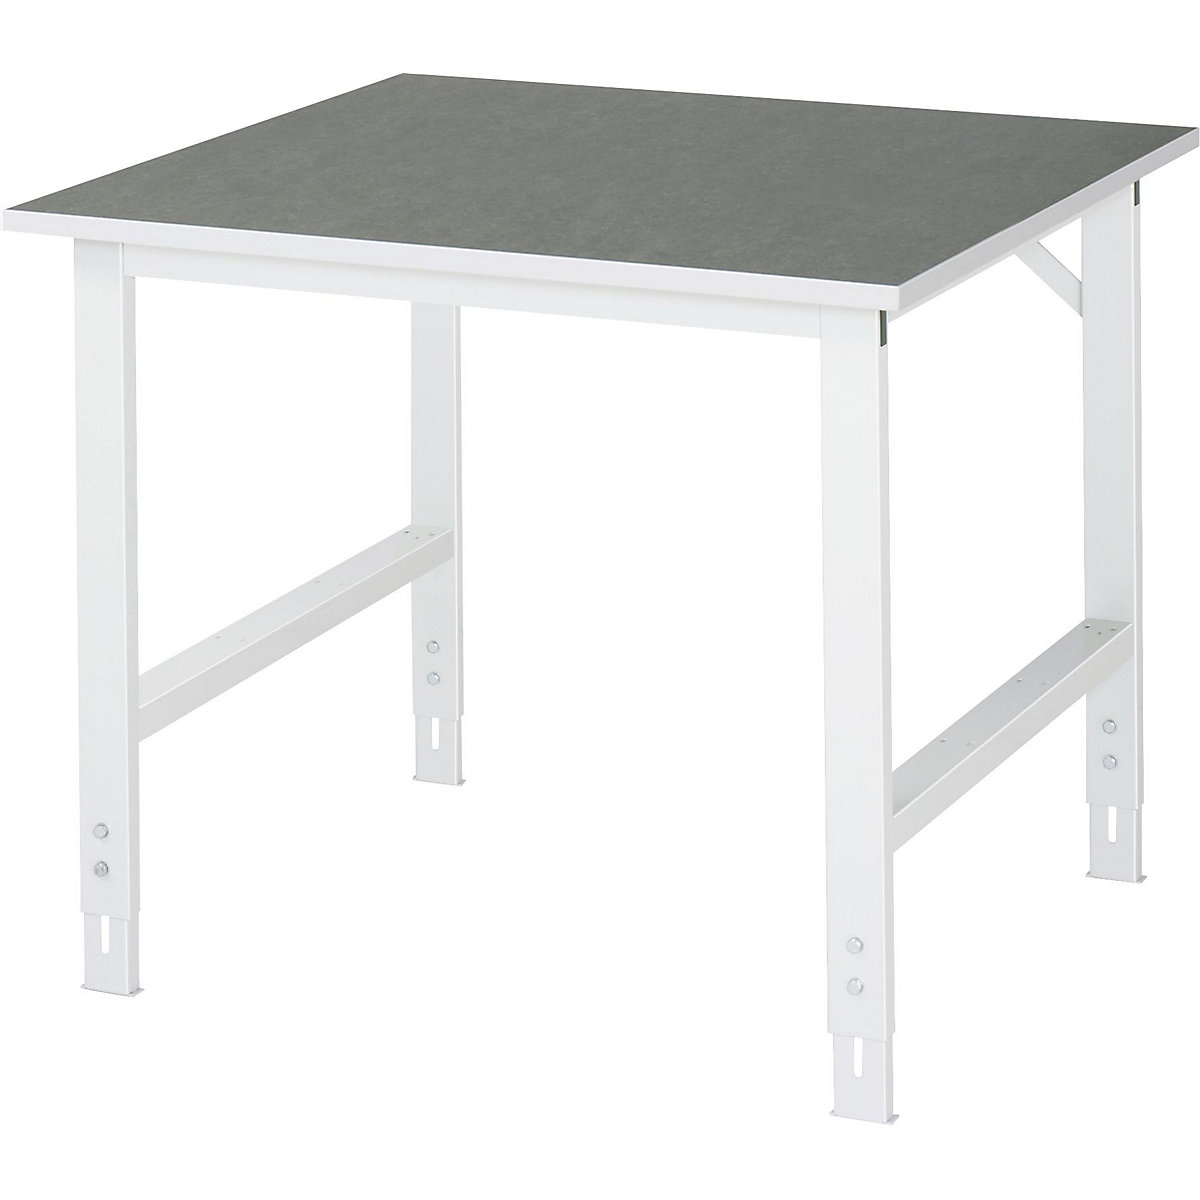 Werktafel, in hoogte verstelbaar – RAU, 760 – 1080 mm, linoleum blad, b x d = 1000 x 1000 mm, lichtgrijs-14